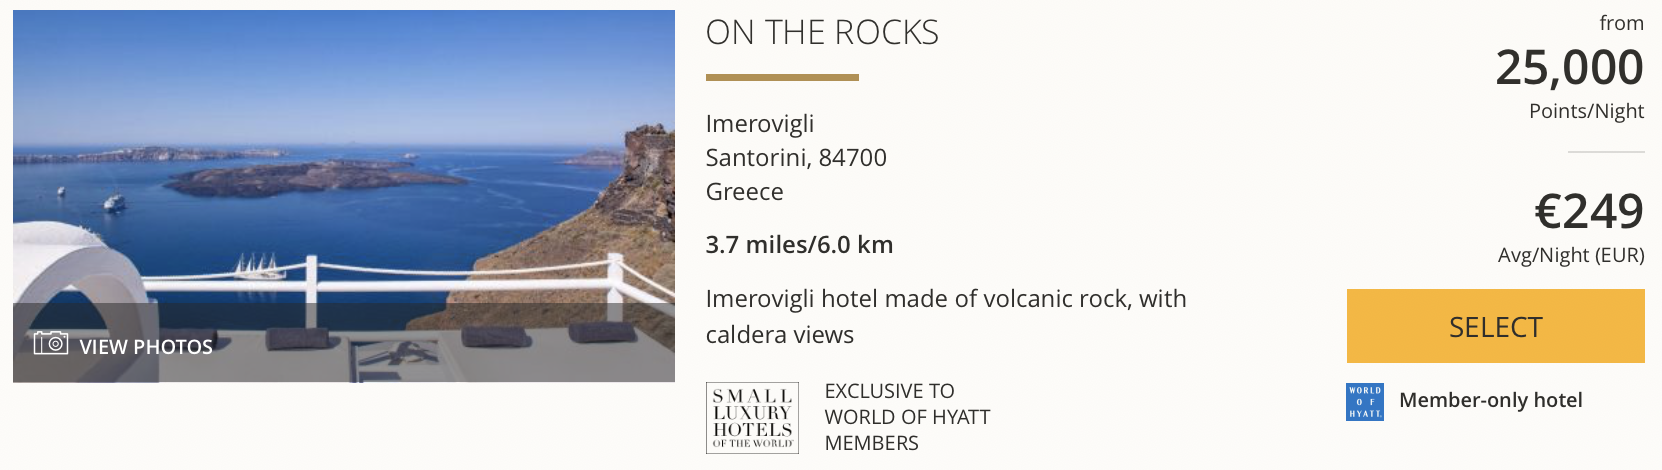 Hyatt Punkte SLH Hotels sammeln Small Luxury Hotels of the World 25.000 Punkte